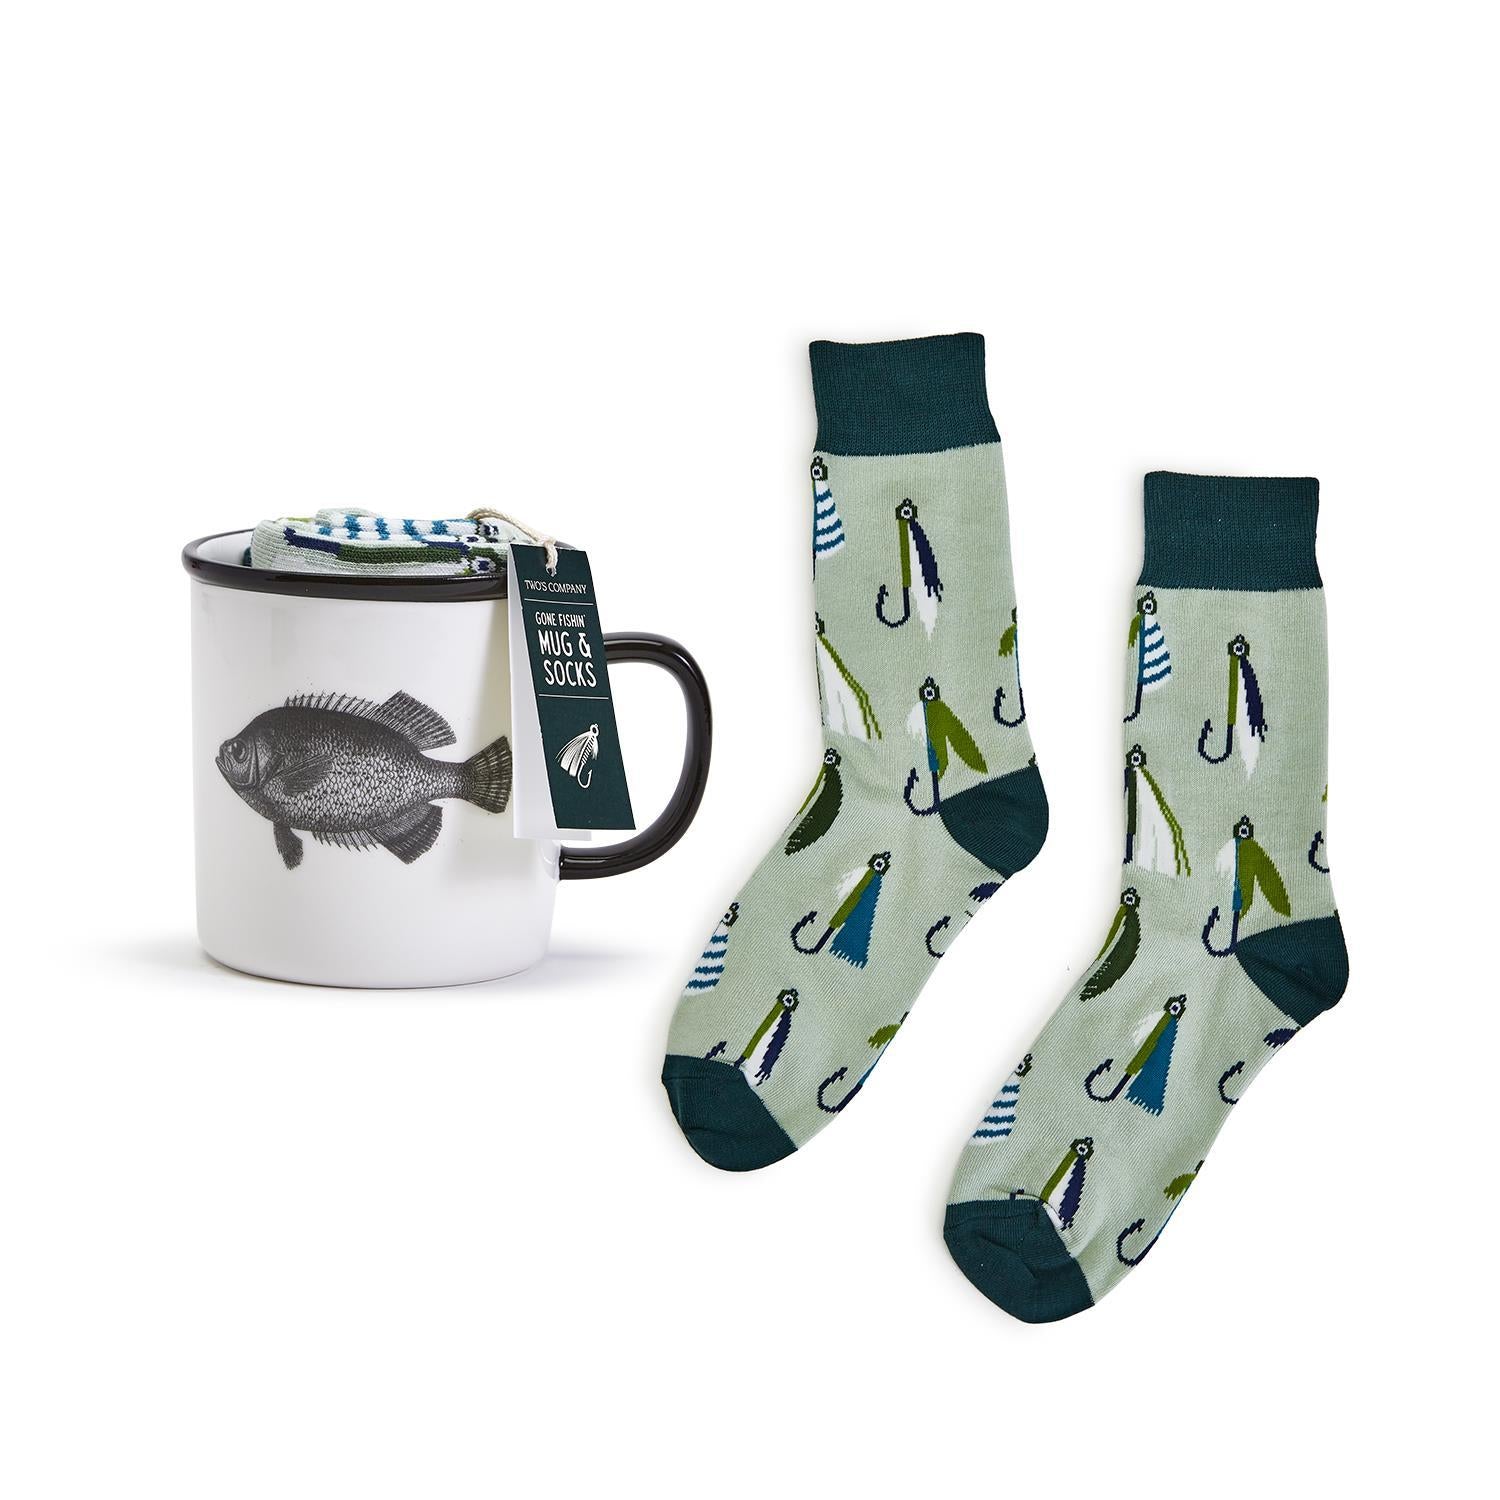 Gone Fishin' sock and mug set